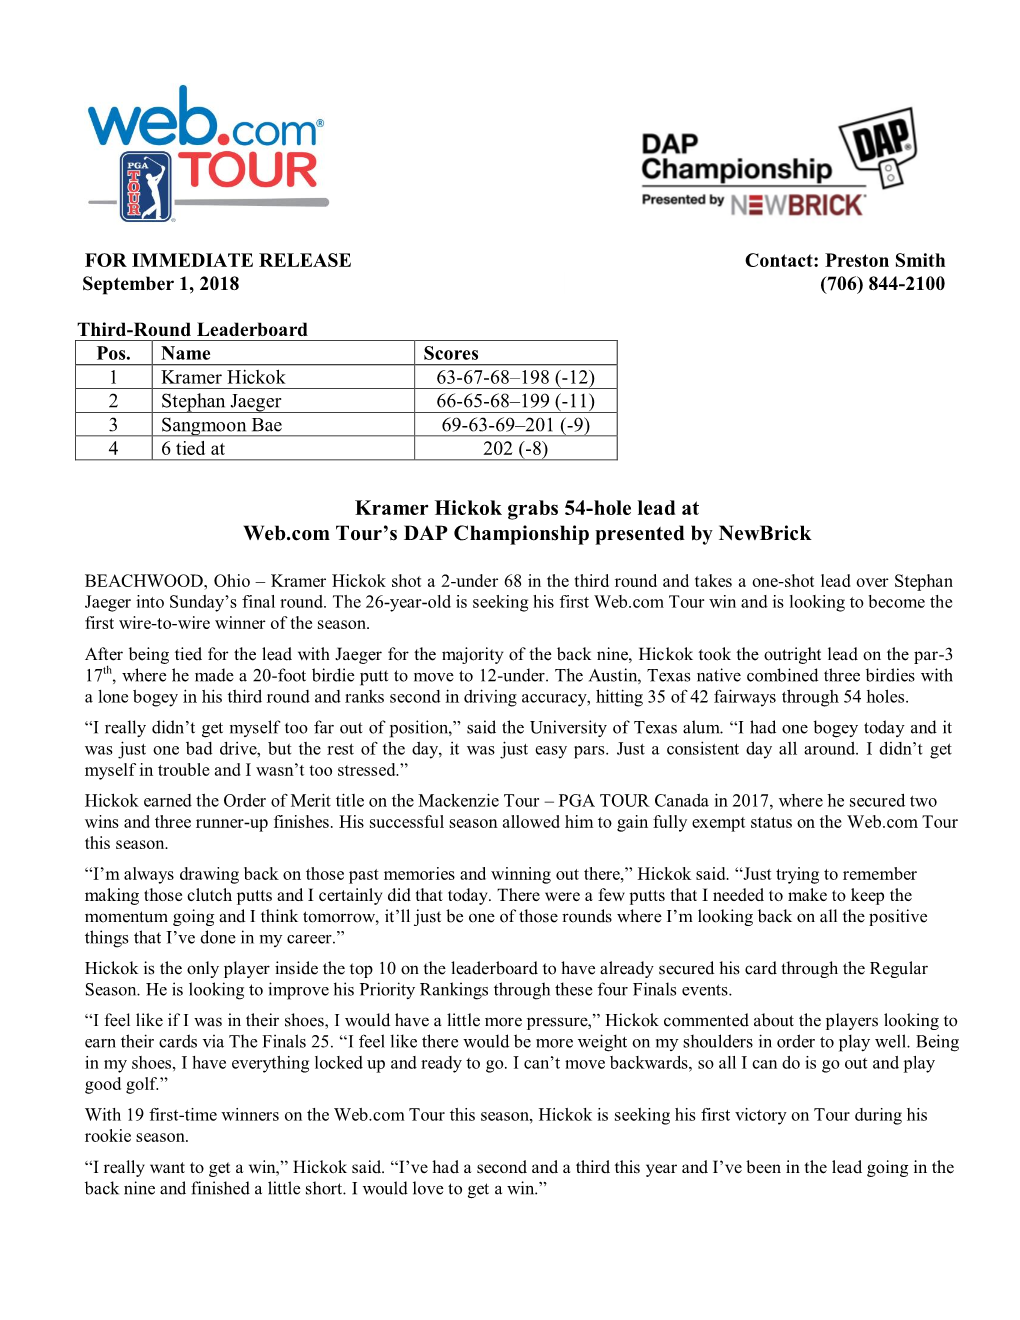 Kramer Hickok Grabs 54-Hole Lead at Web.Com Tour's DAP